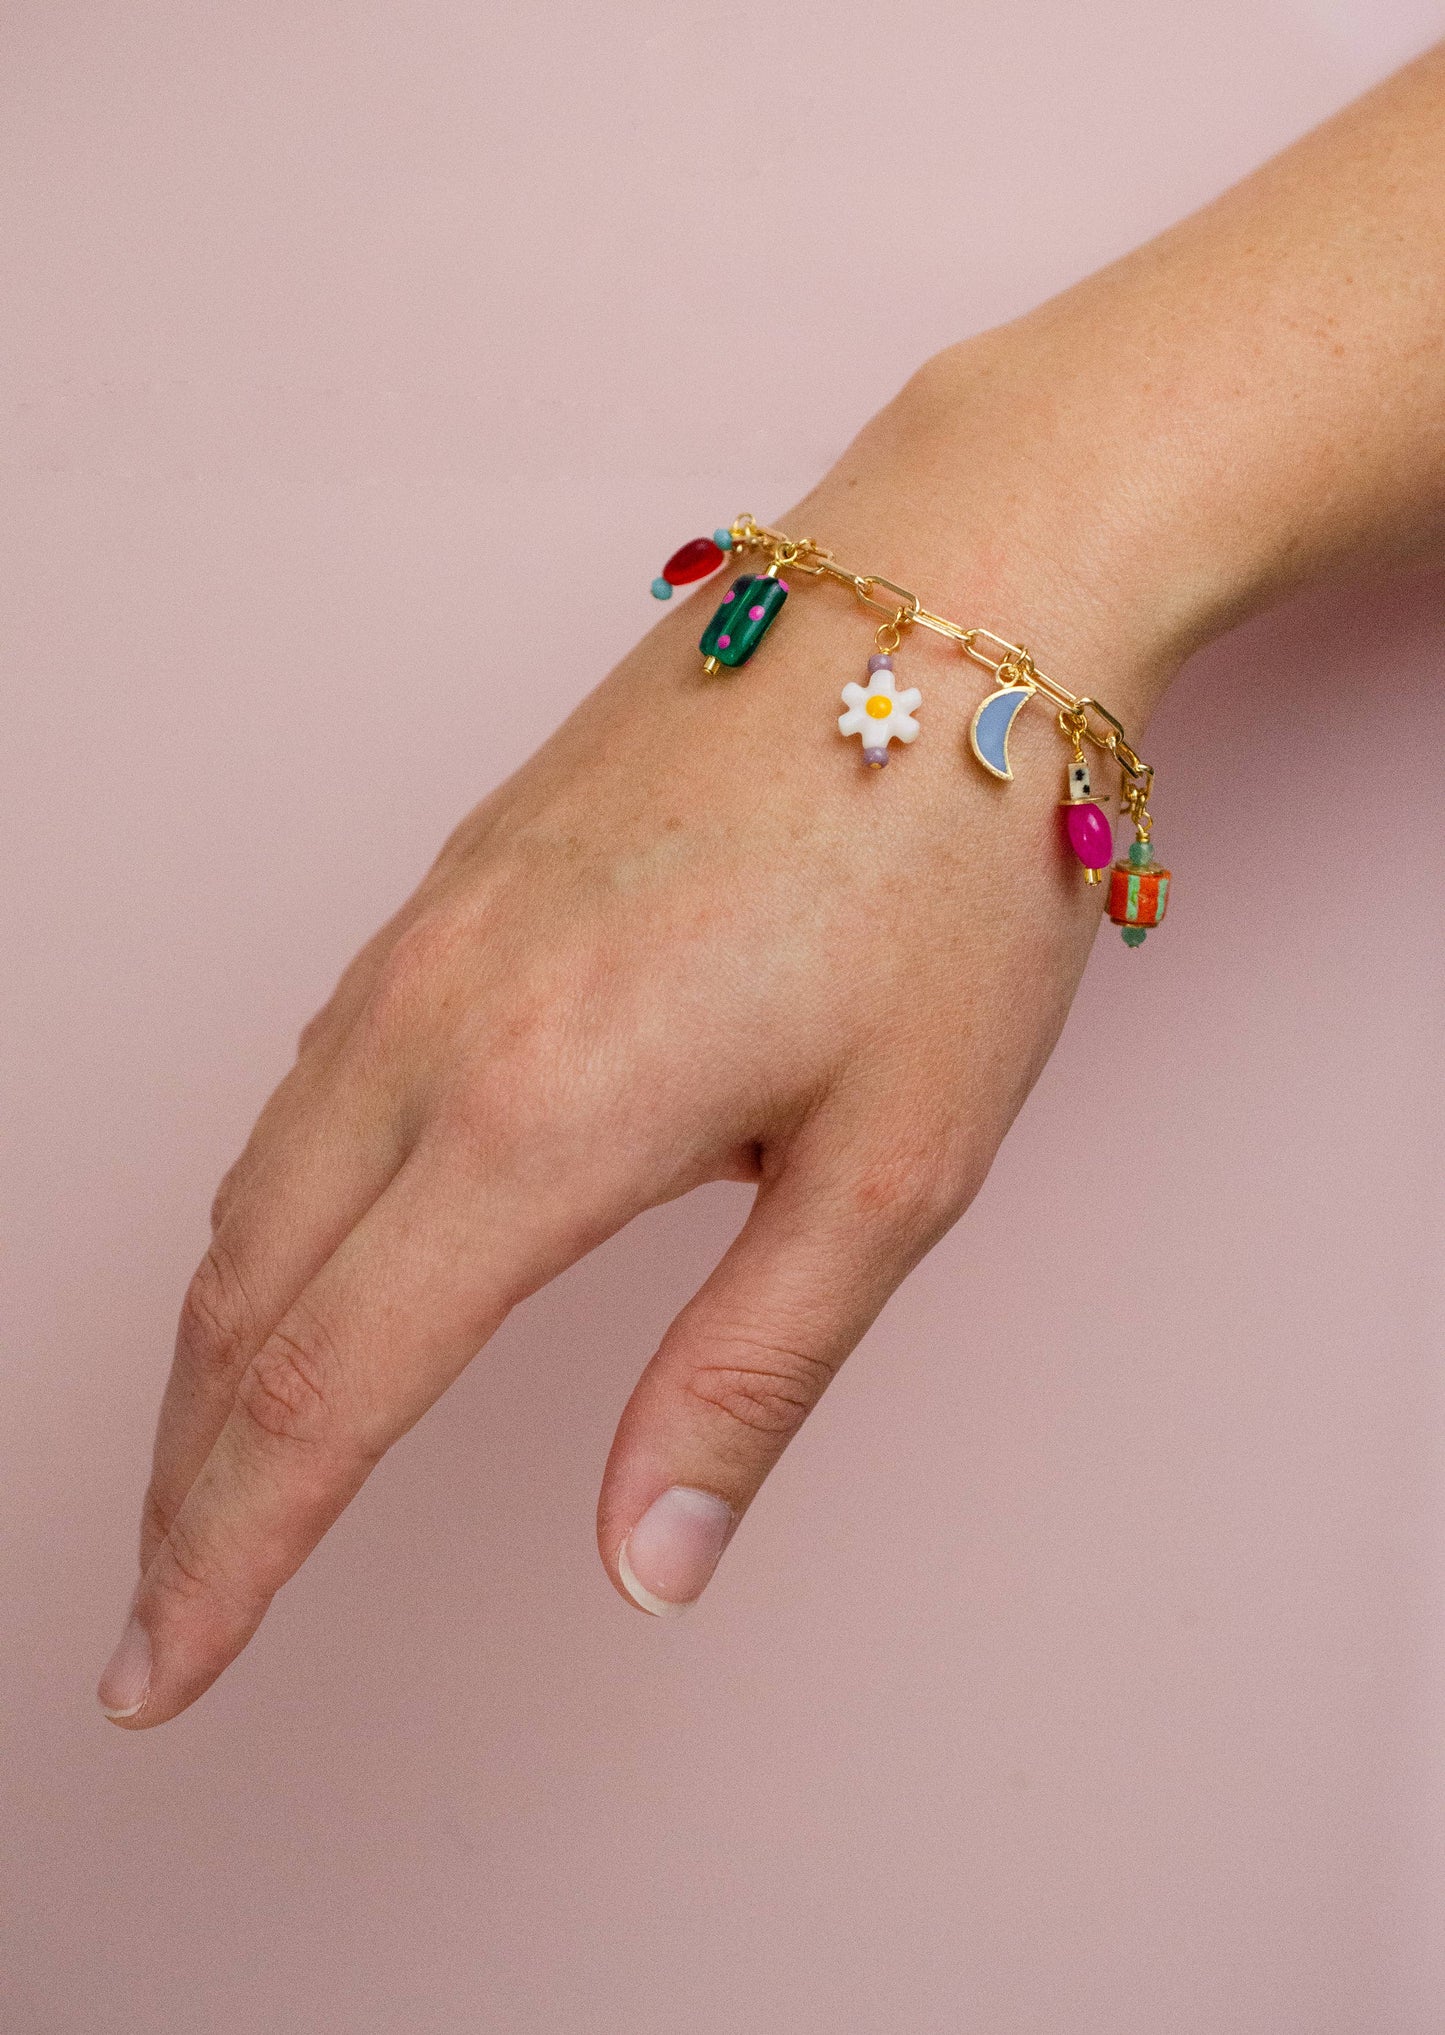 Ladybird Colorful Charm Bracelet